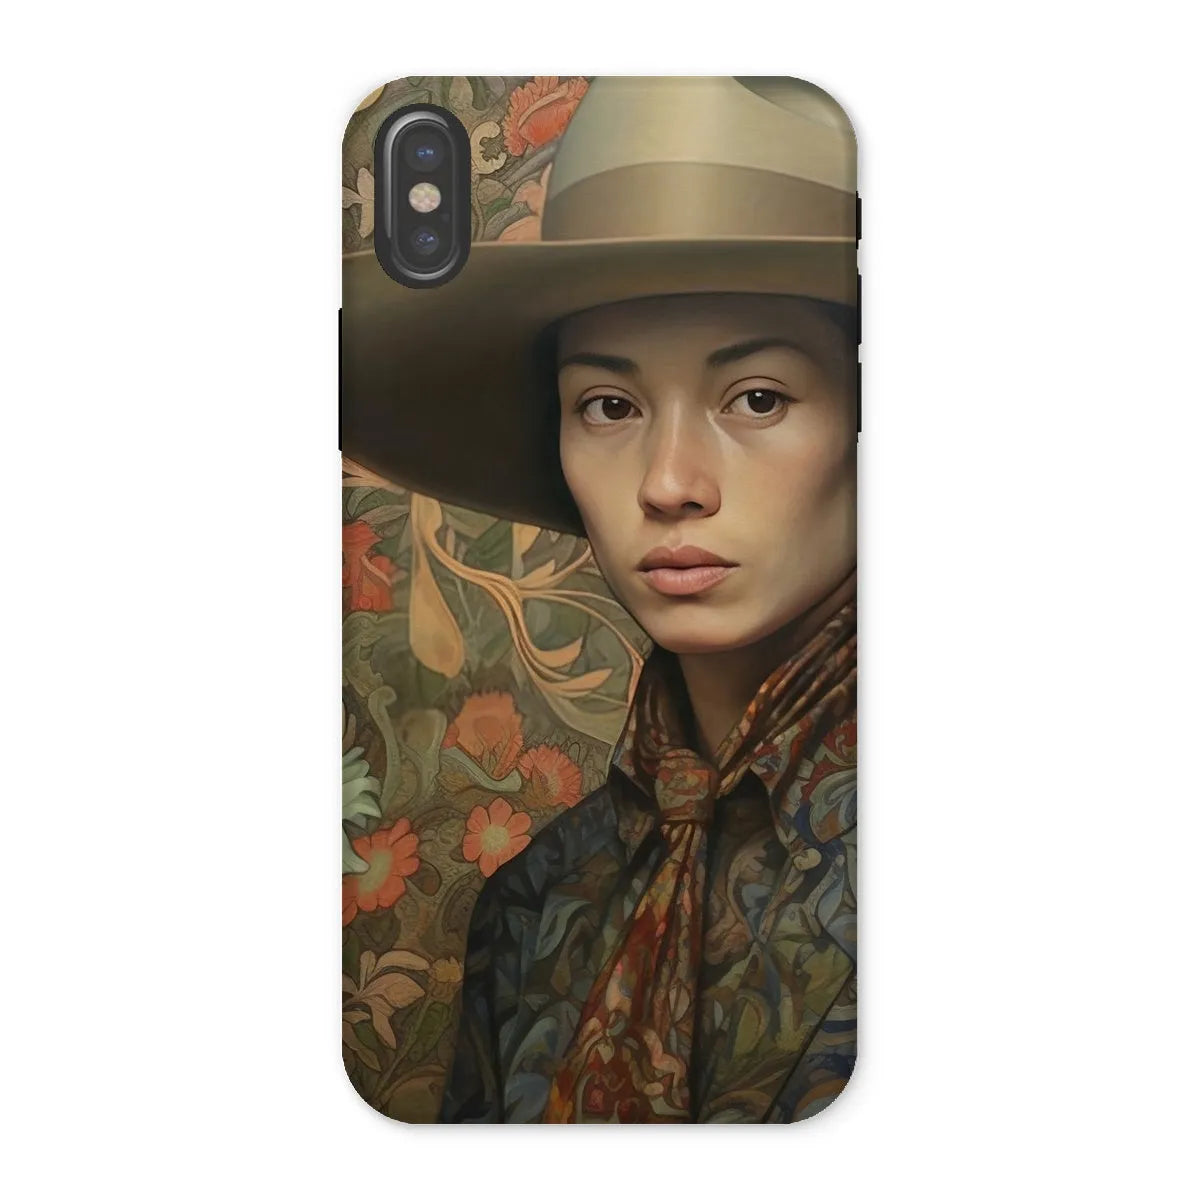 Fulin The Gay Cowboy - Dandy Gay Men Art Phone Case - Iphone x / Matte - Mobile Phone Cases - Aesthetic Art